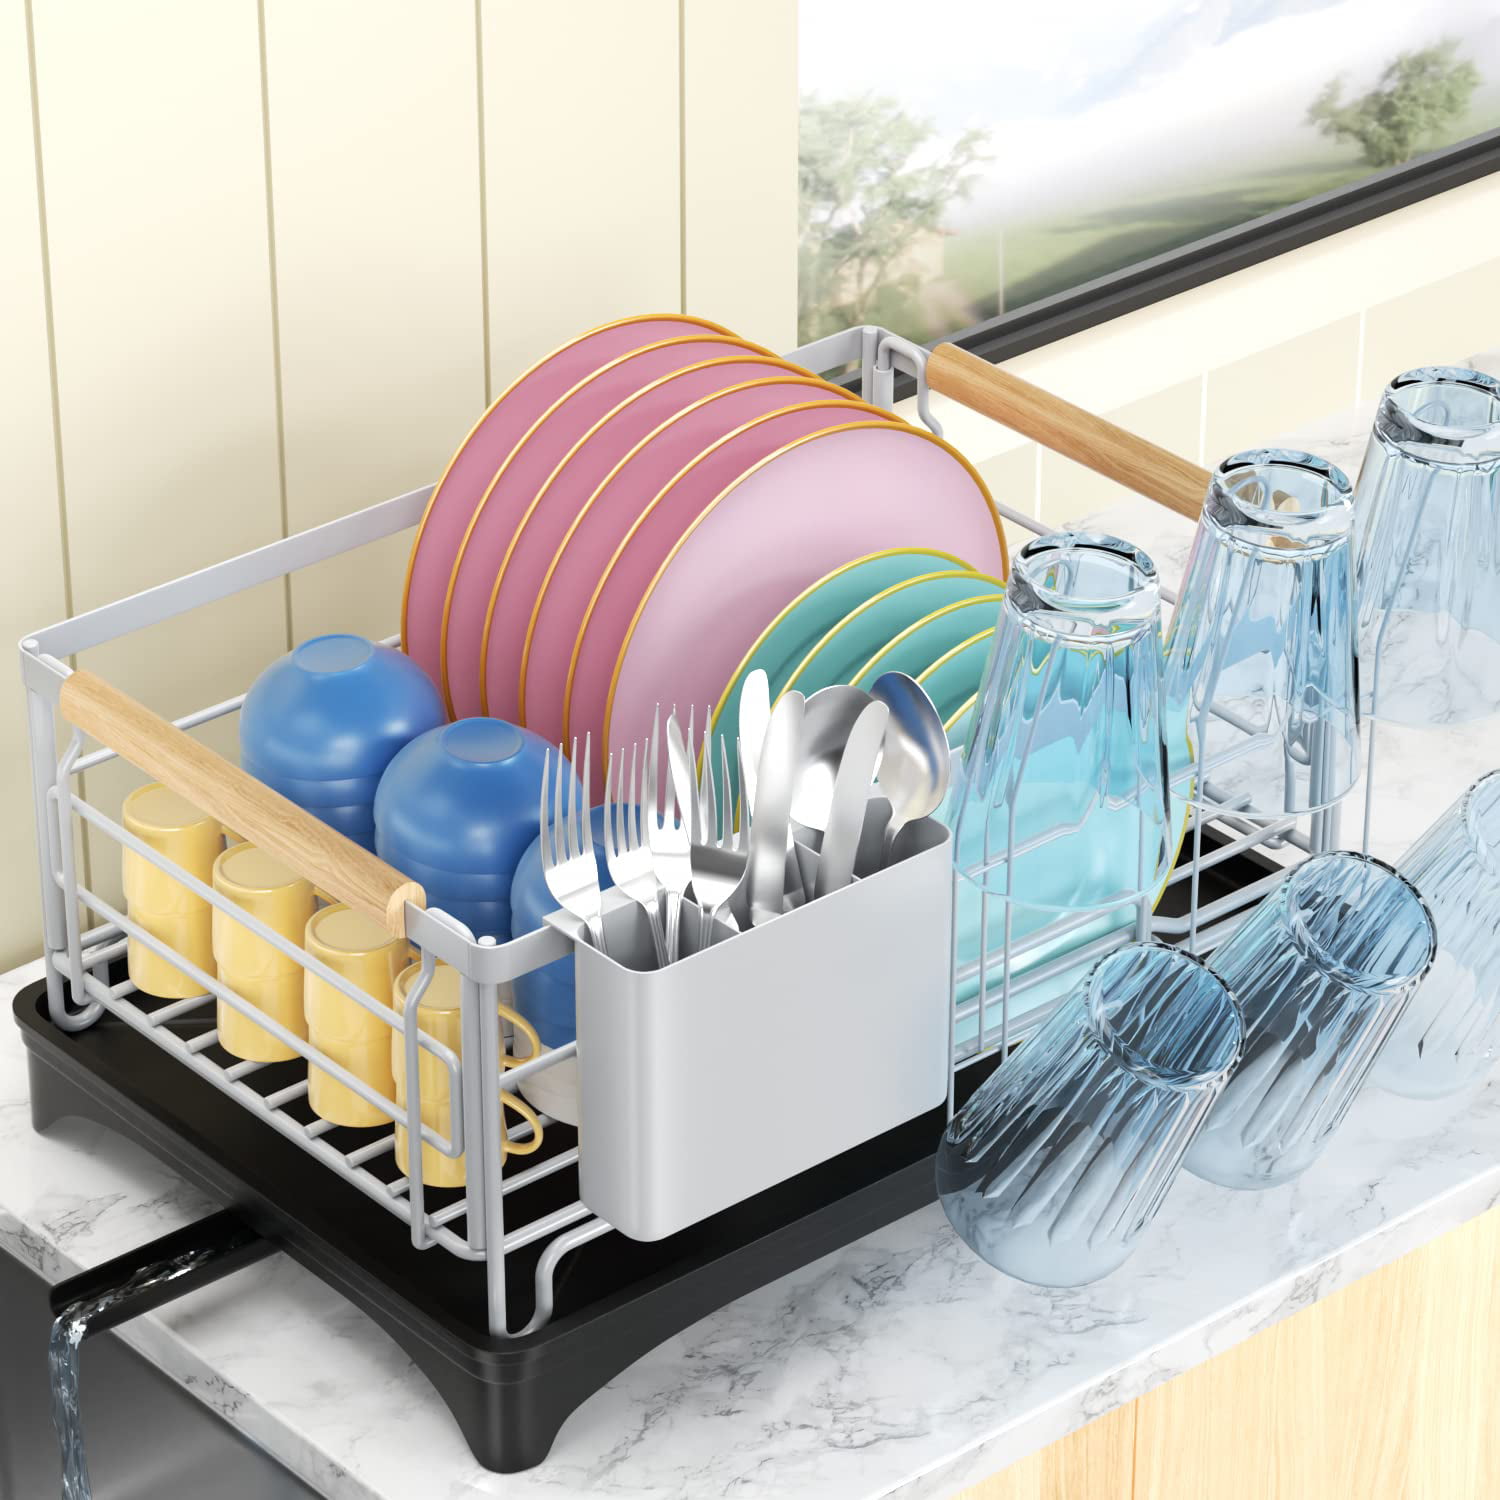  CELESTIAL KITCHEN Dish Drying Rack – Large Capacity